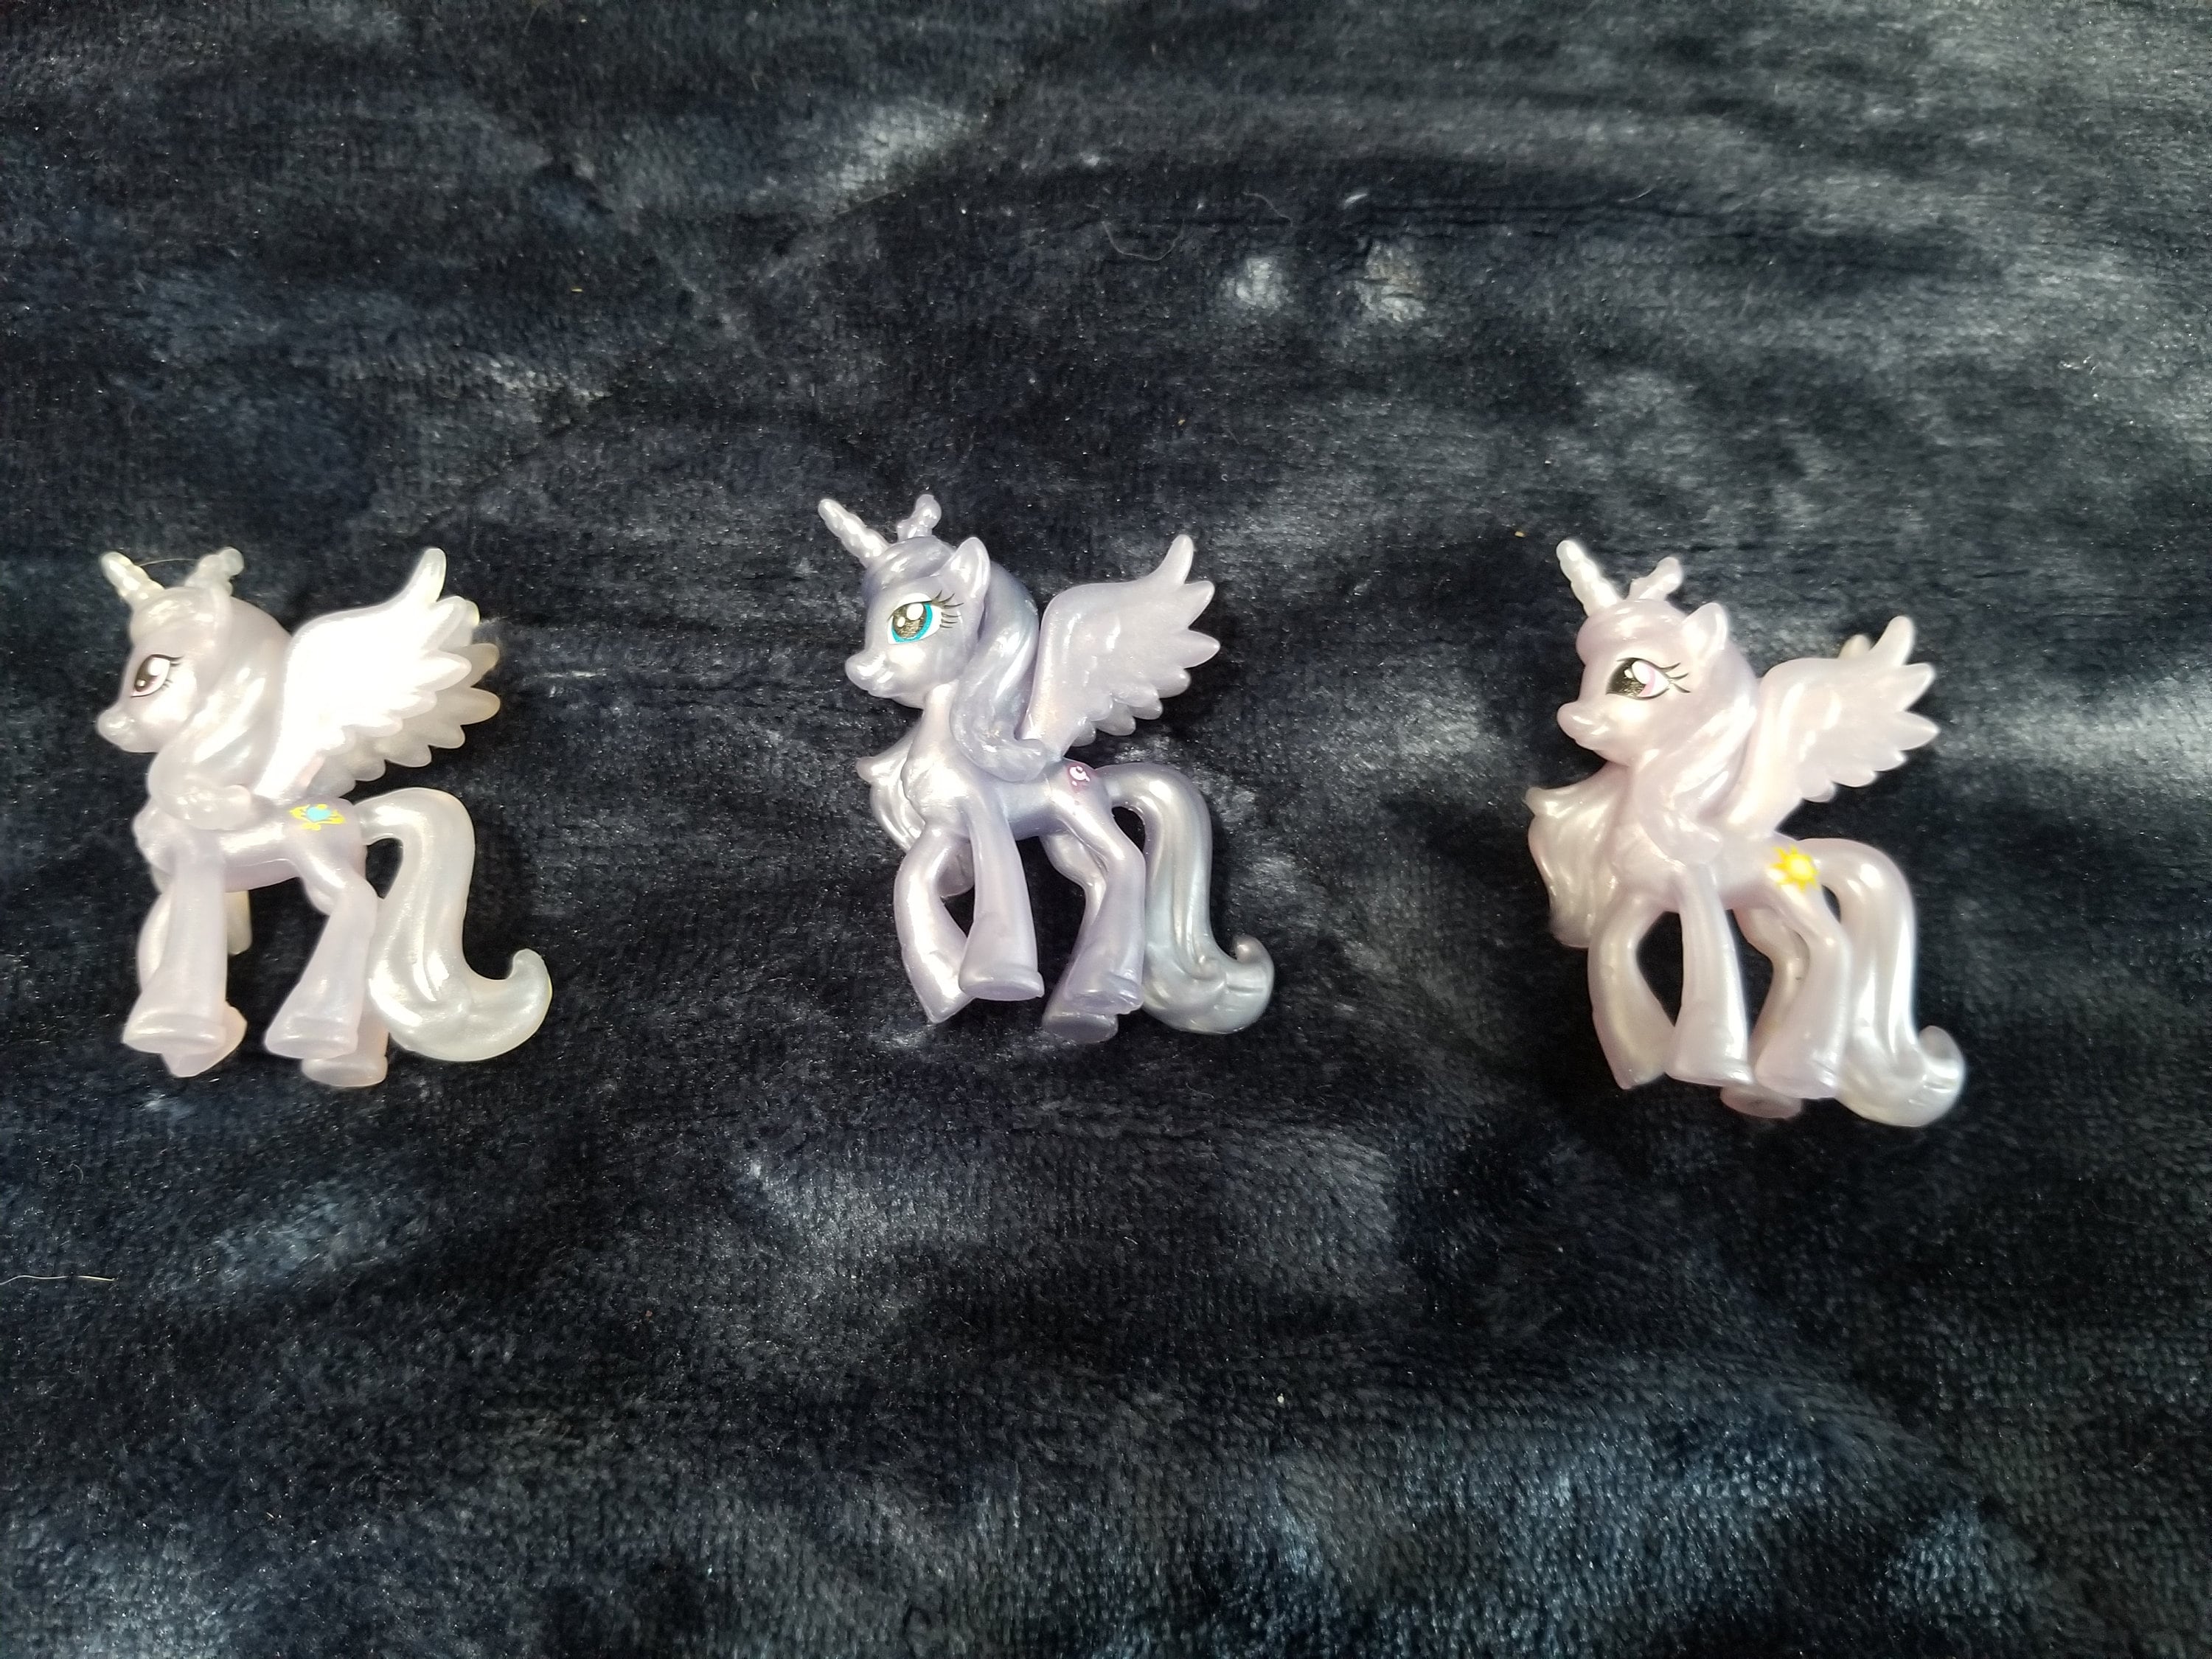 My Little Pony Celestial Ponies Assortment